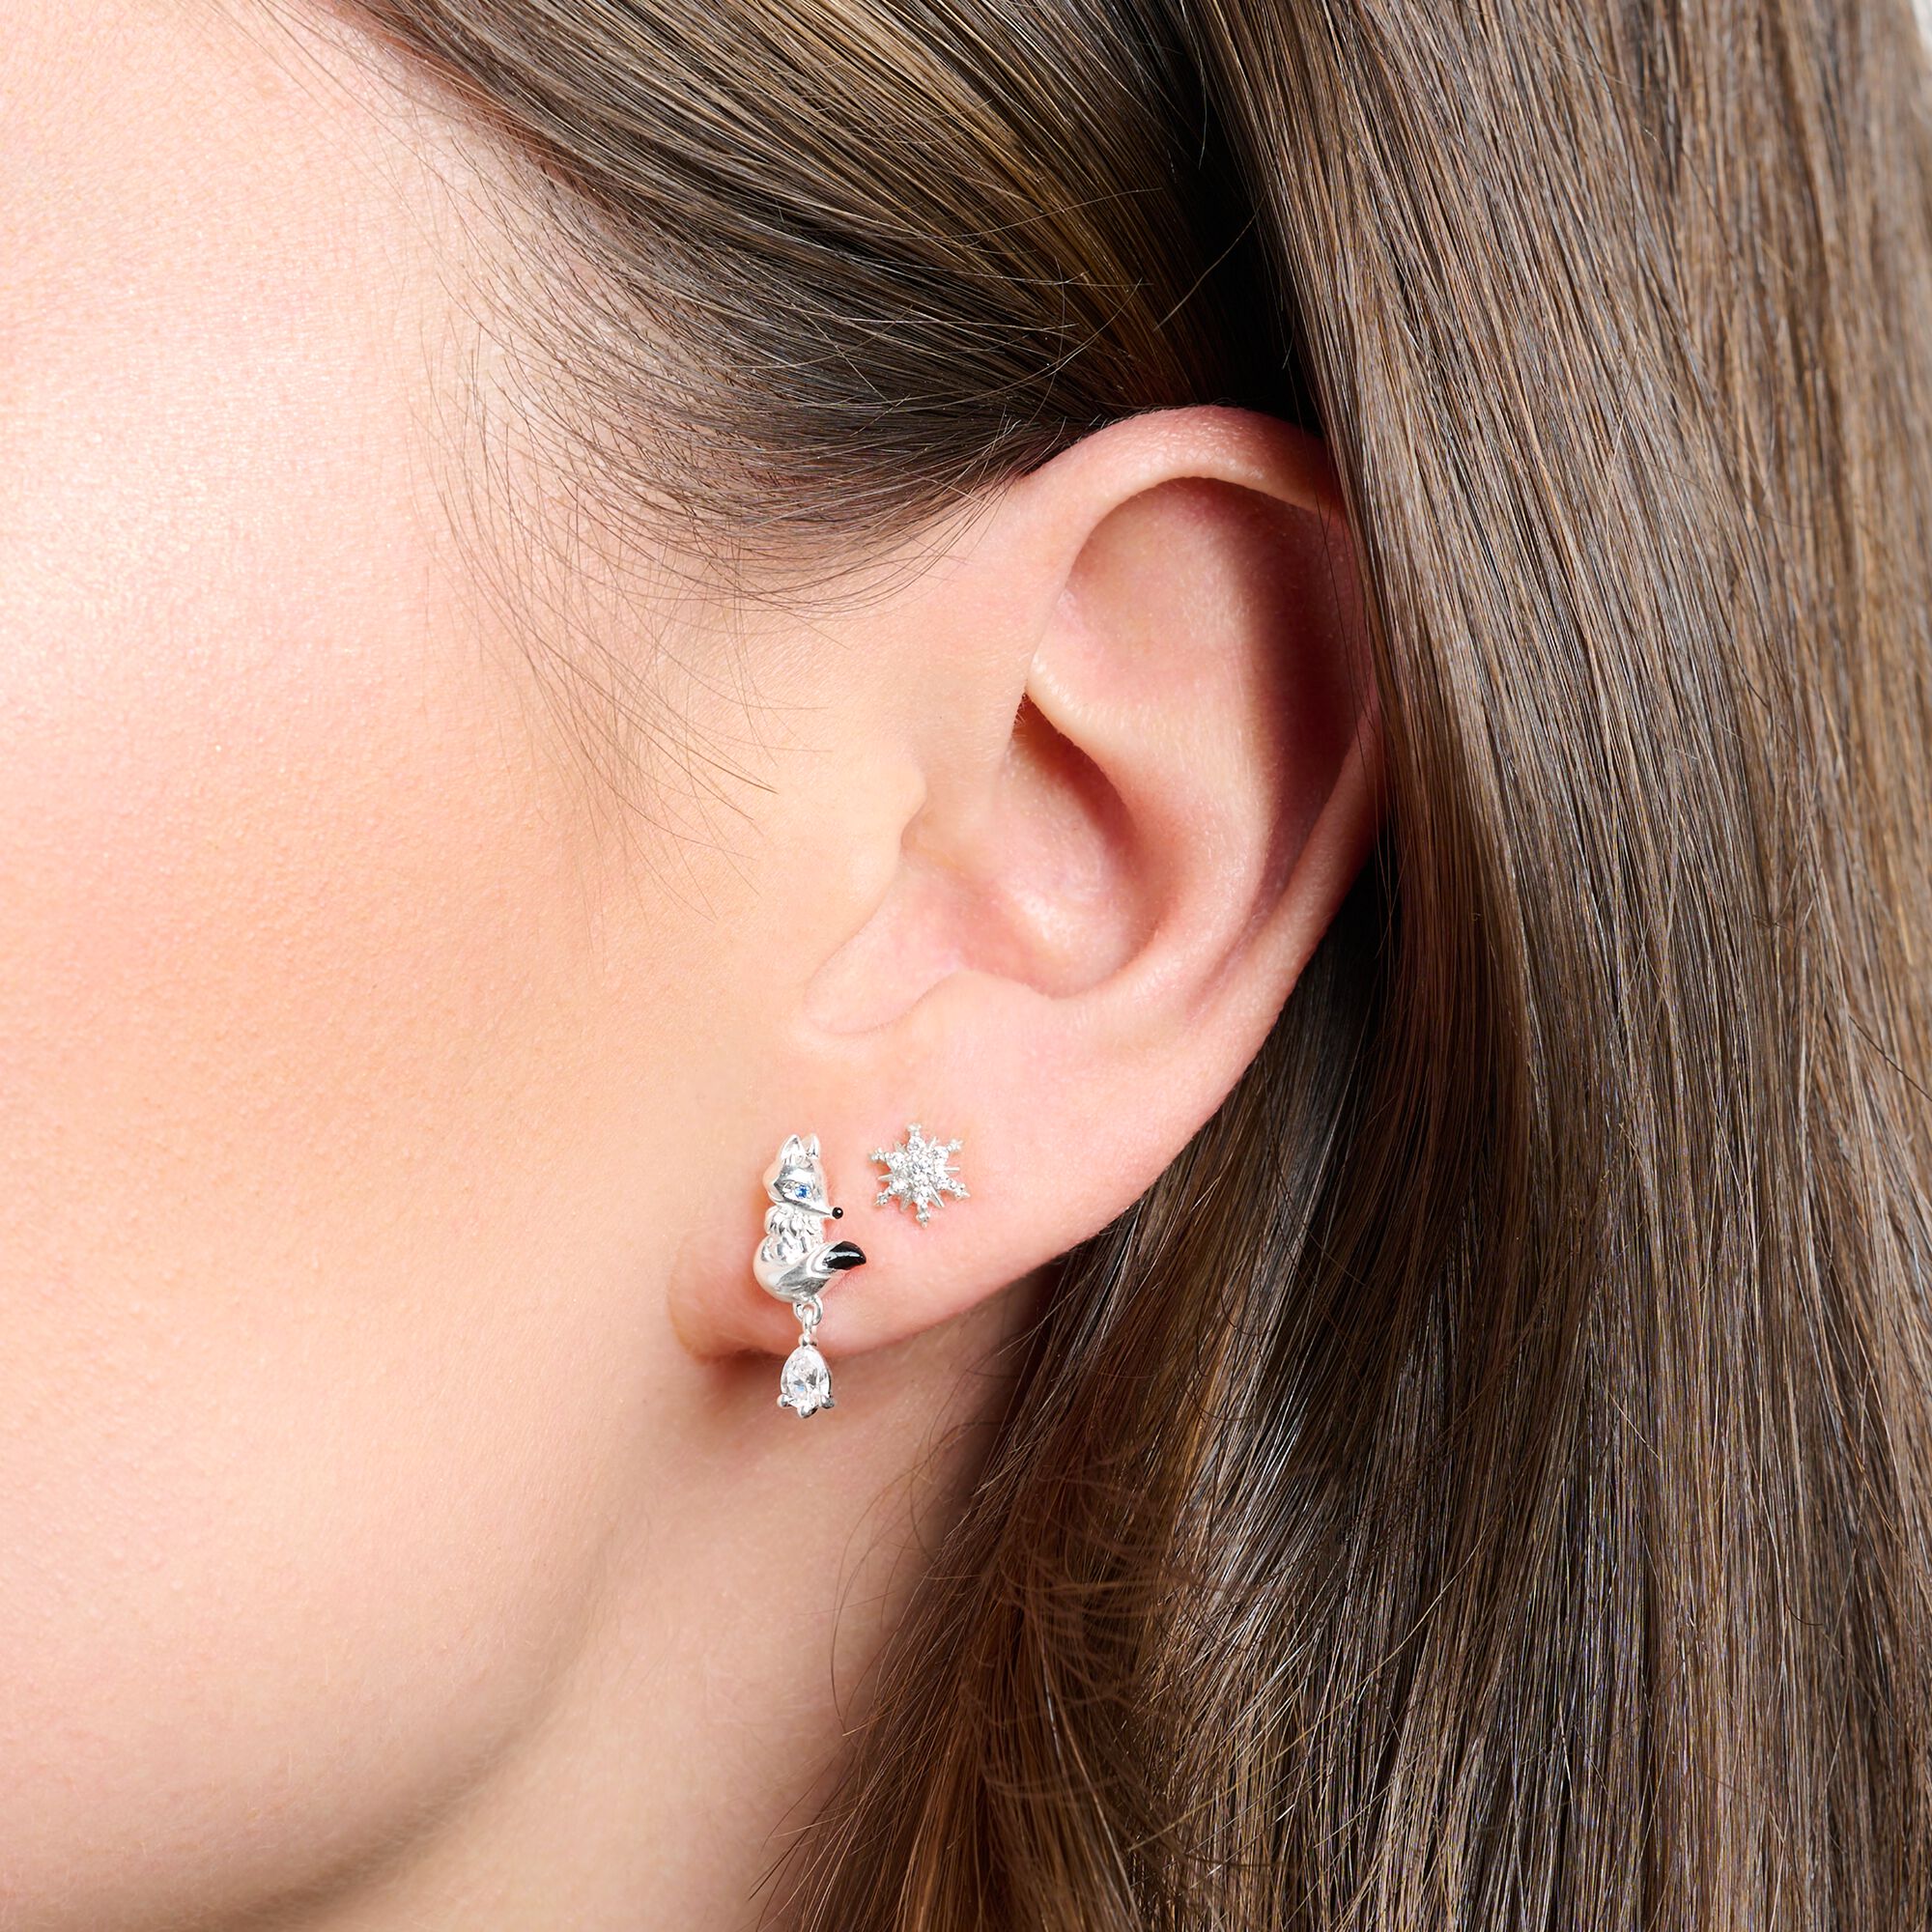 THOMAS SABO earring: stud snowflake, silver | Single